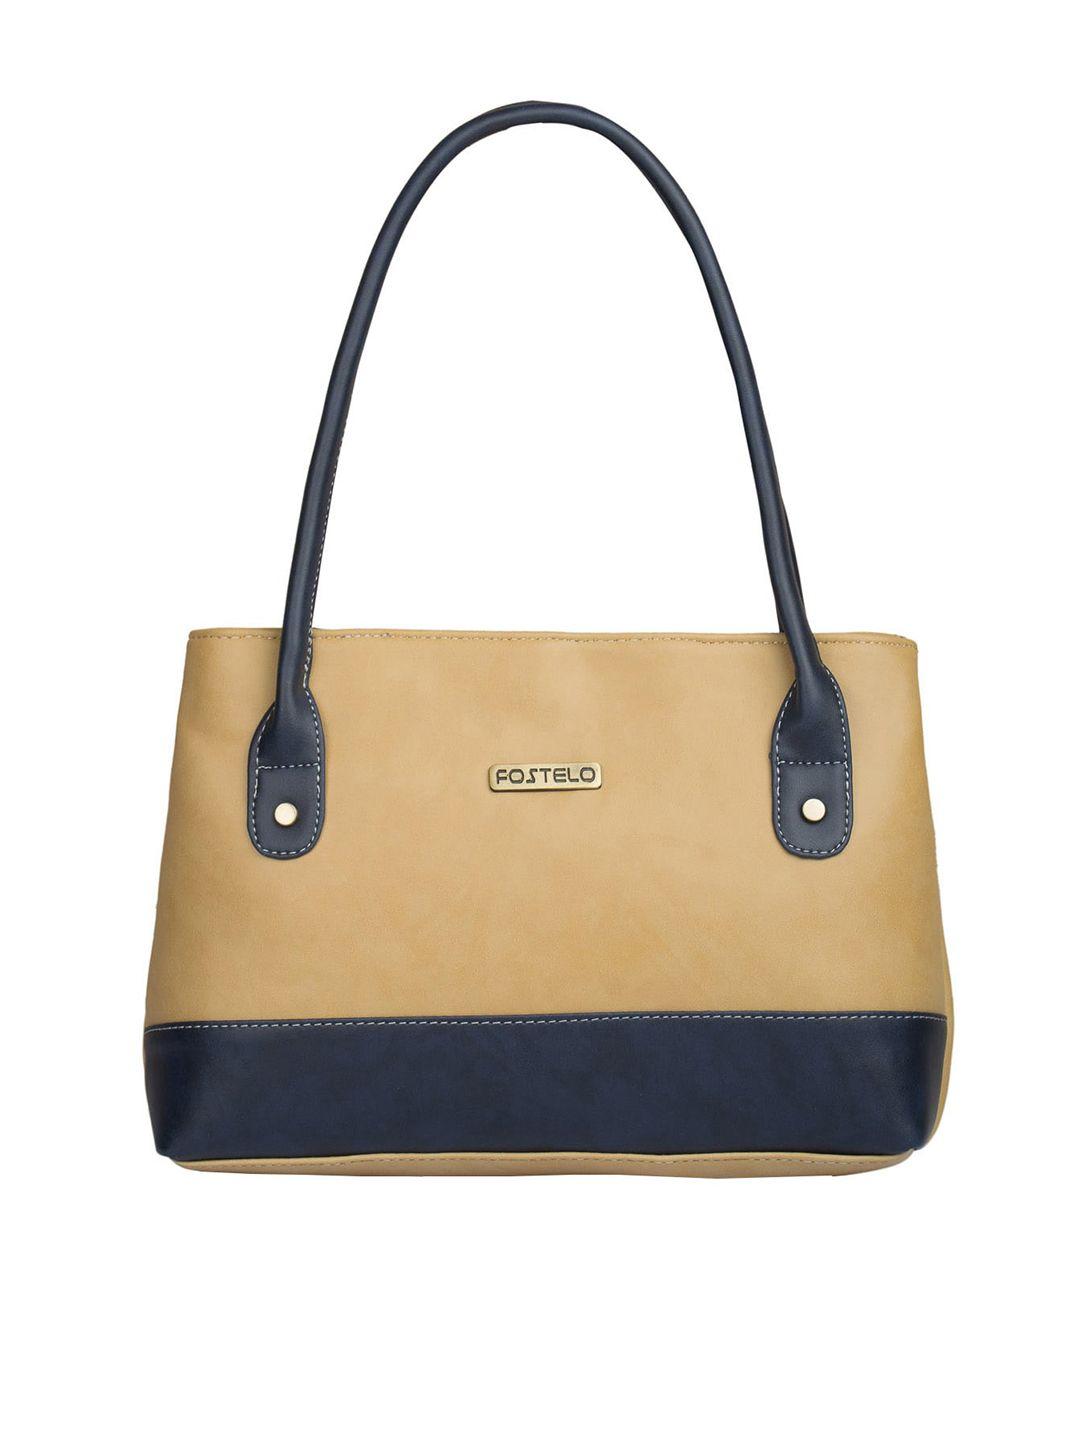 fostelo beige & navy blue colourblocked shoulder bag